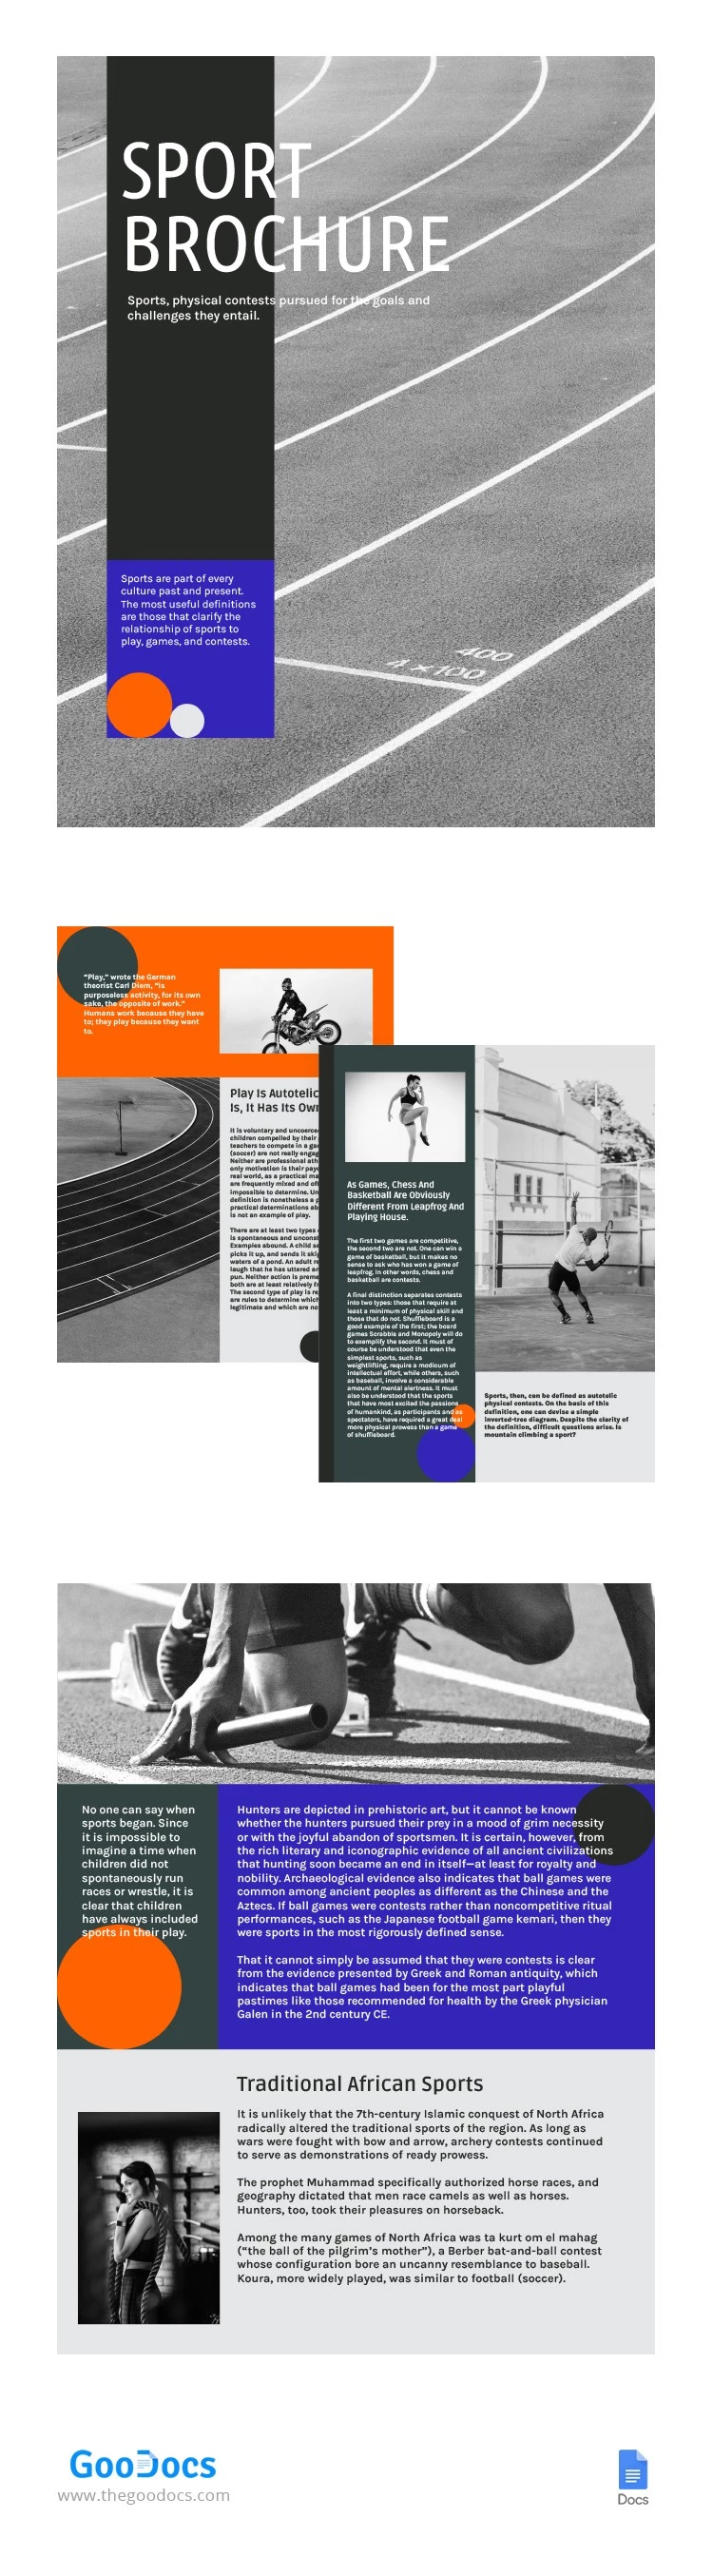 Brochura de Esportes Modernos - free Google Docs Template - 10064950